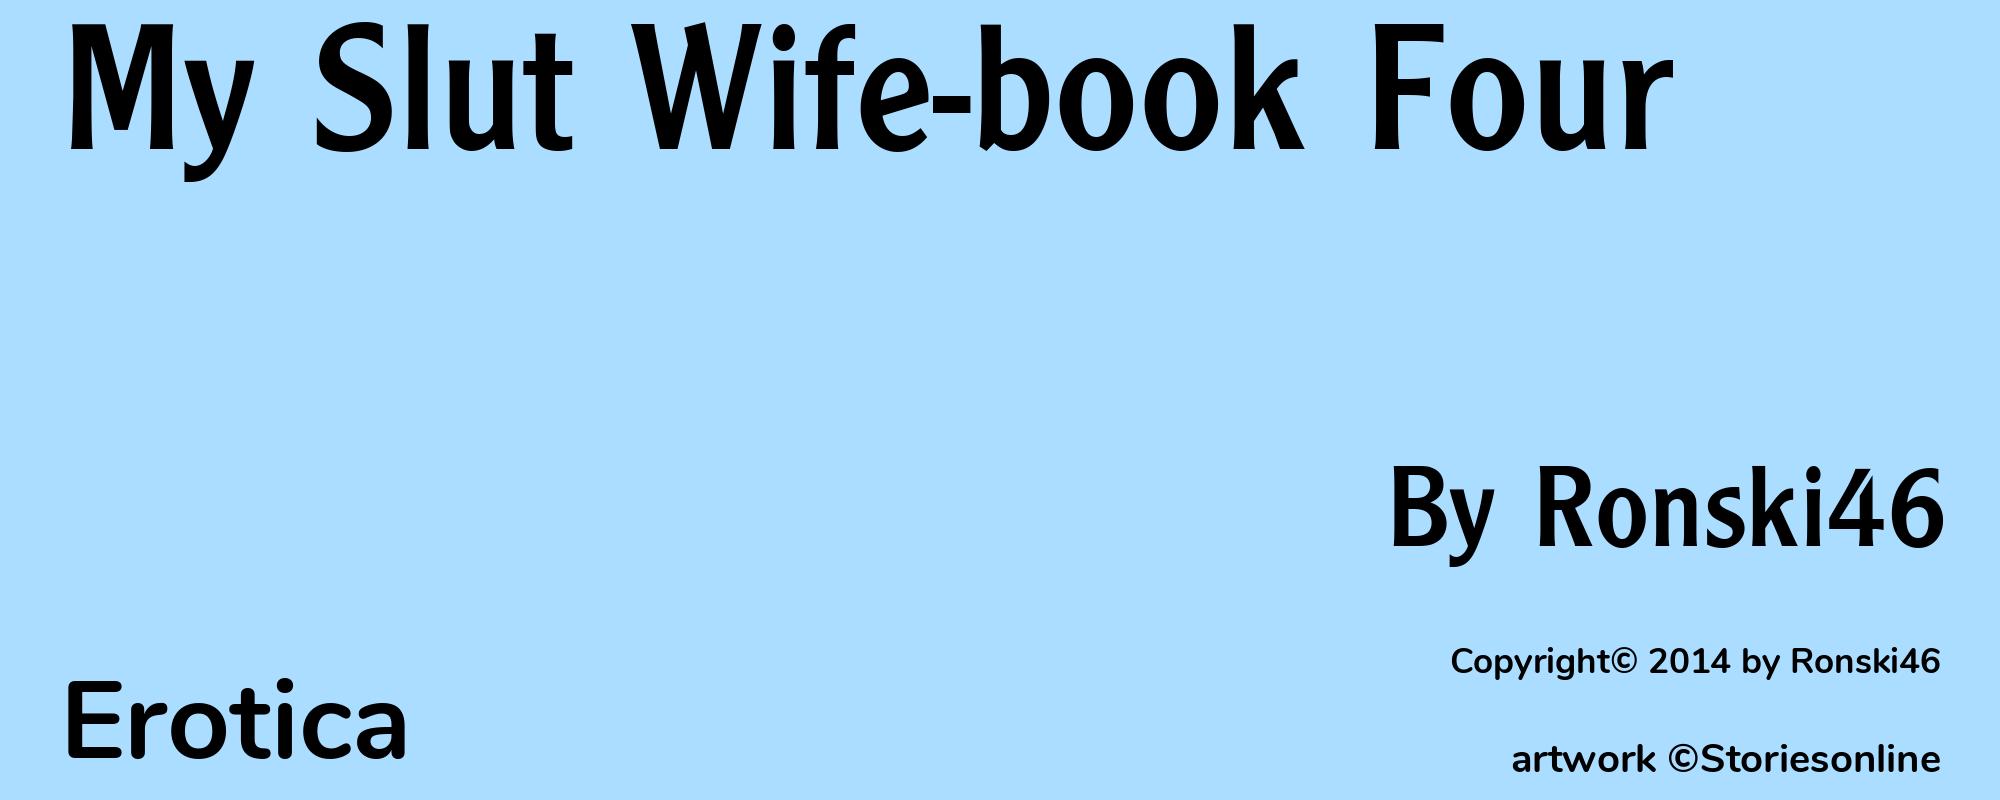 My Slut Wife-book Four - Cover